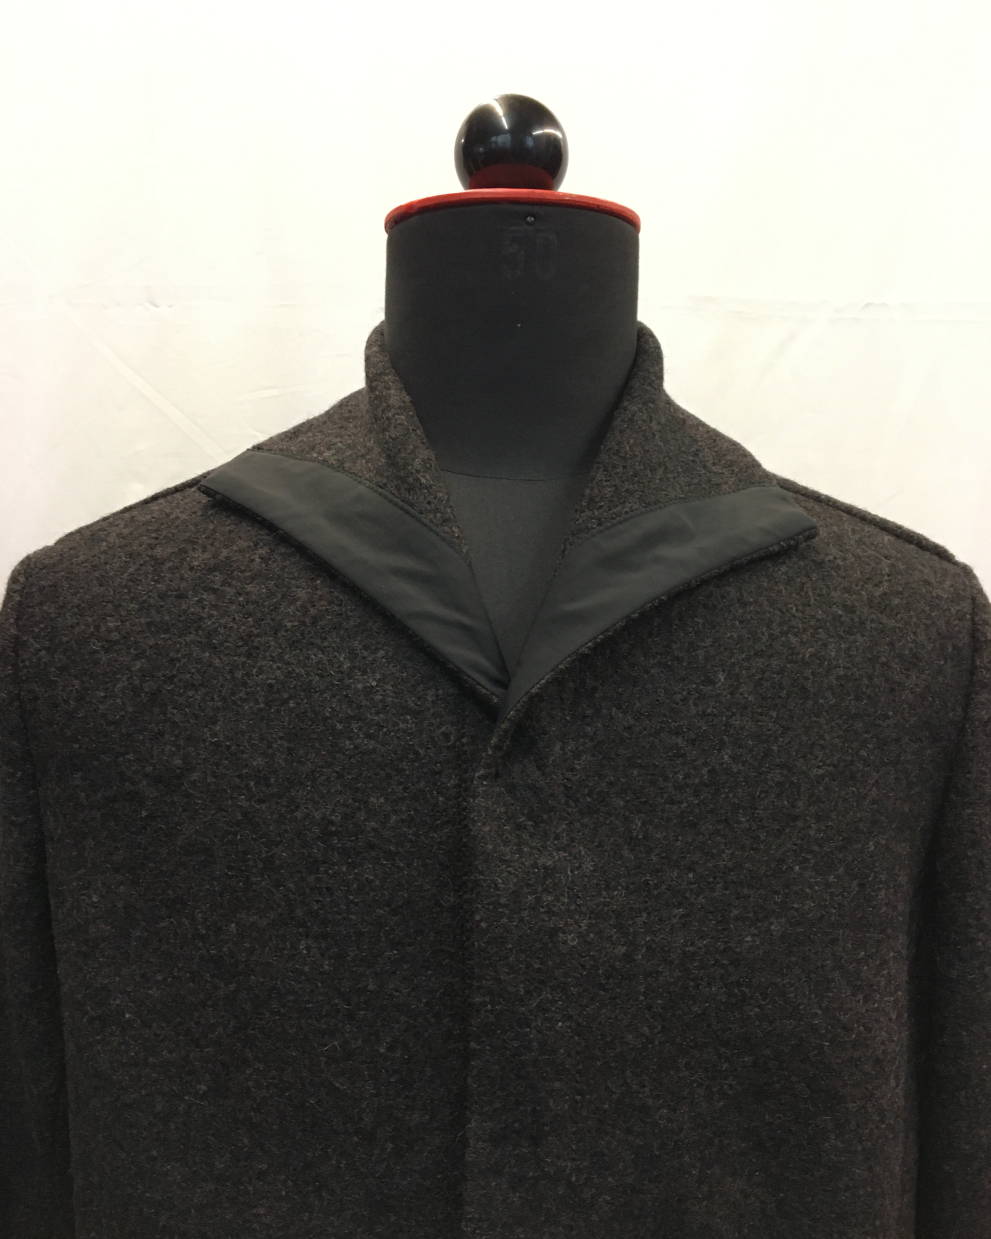 Woolly Jacket – Stokx Patterns